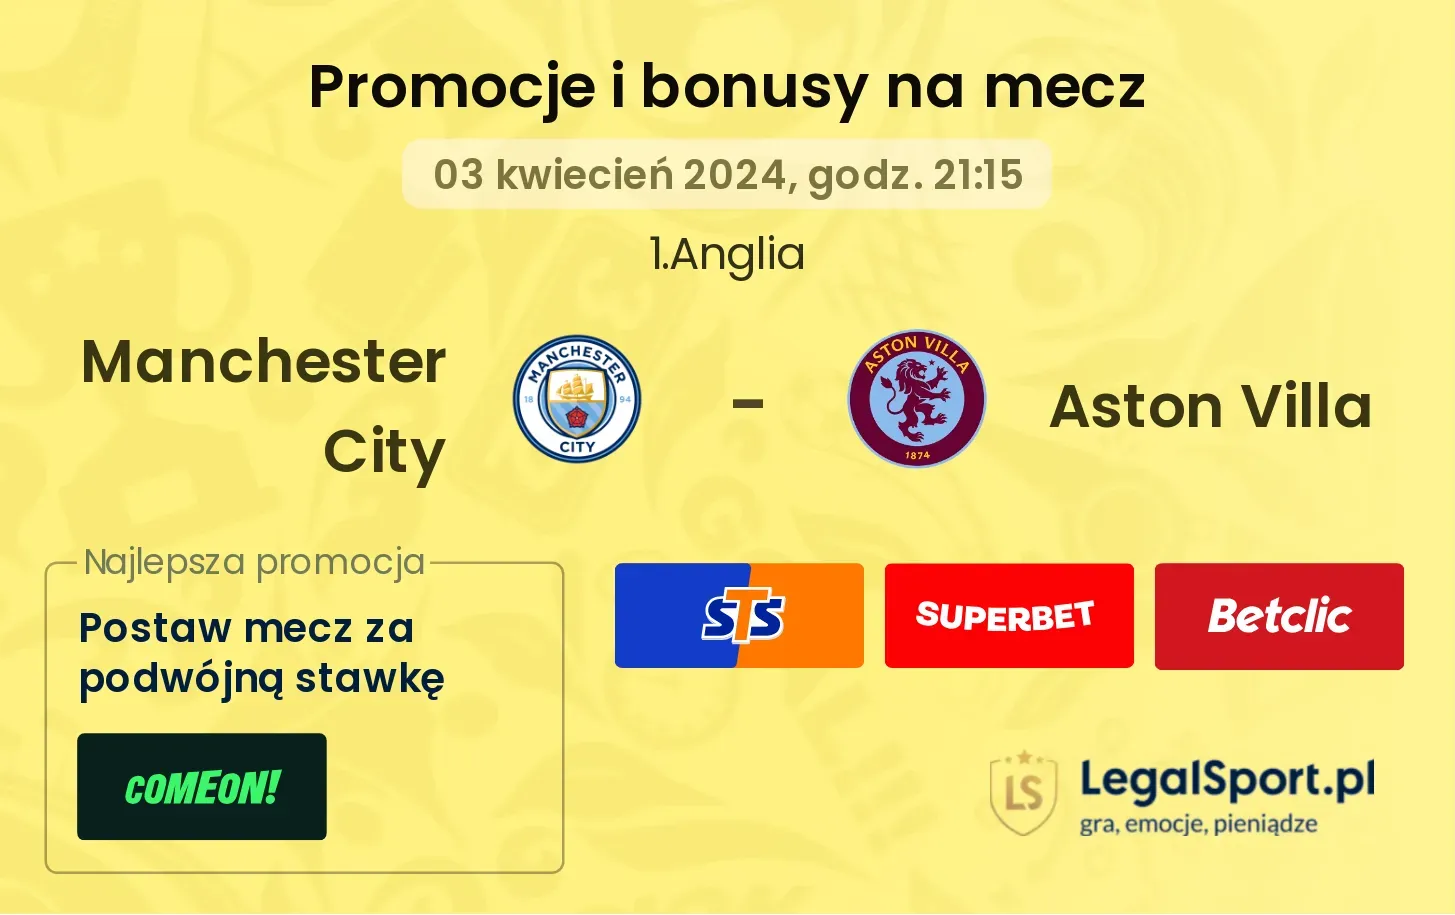 Manchester City - Aston Villa promocje bonusy na mecz